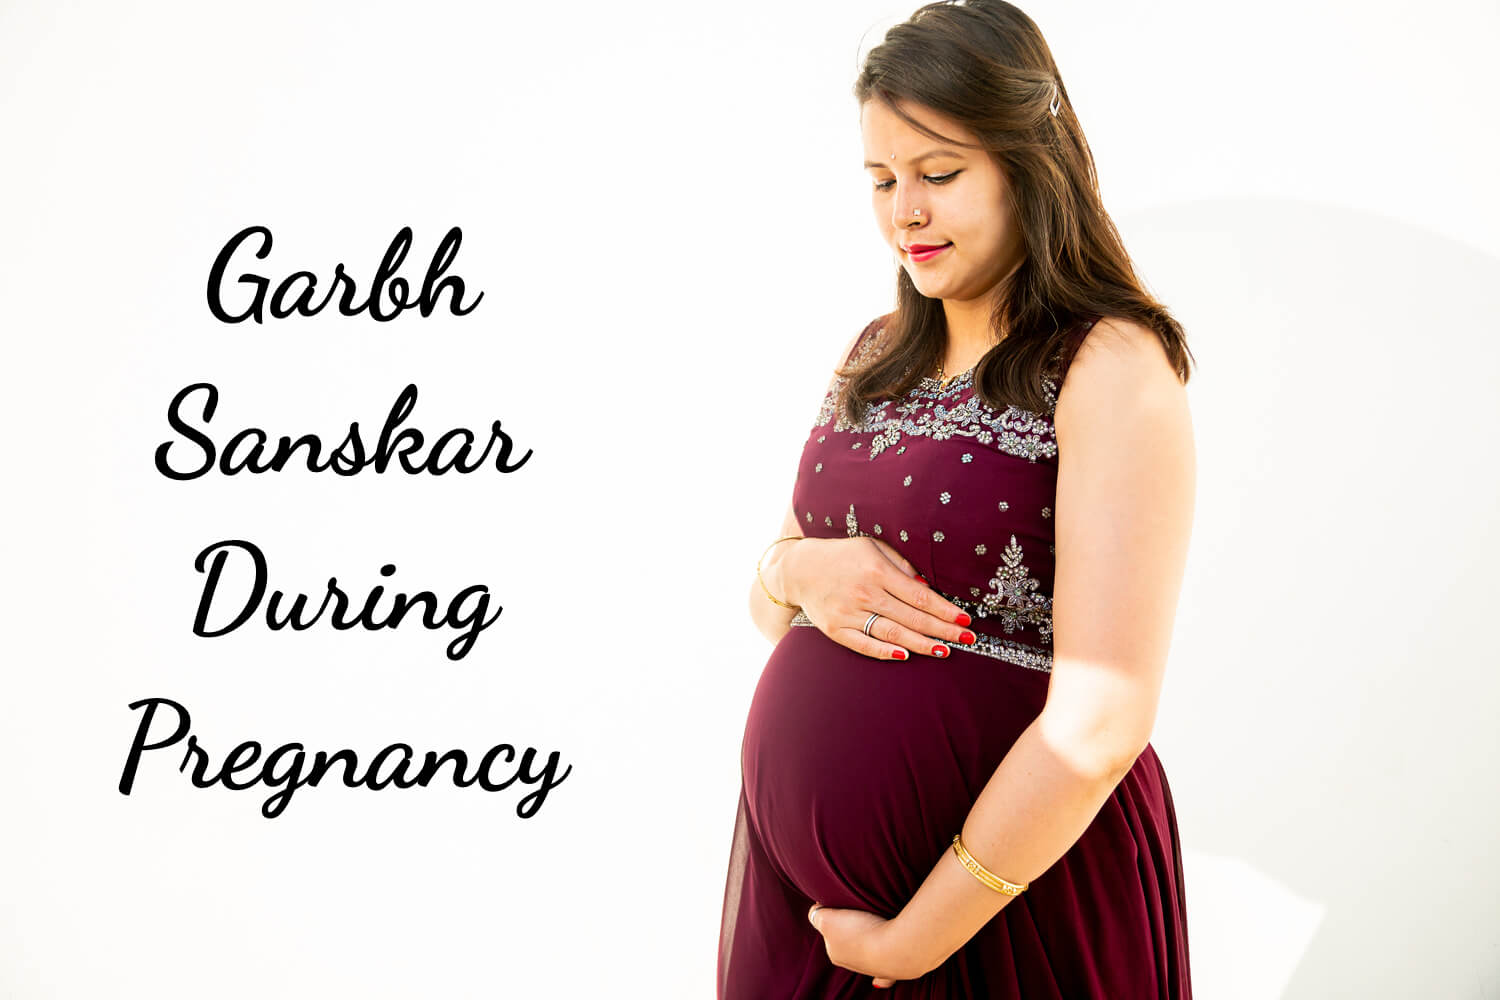 Garbh Sanskar during Pregnancy